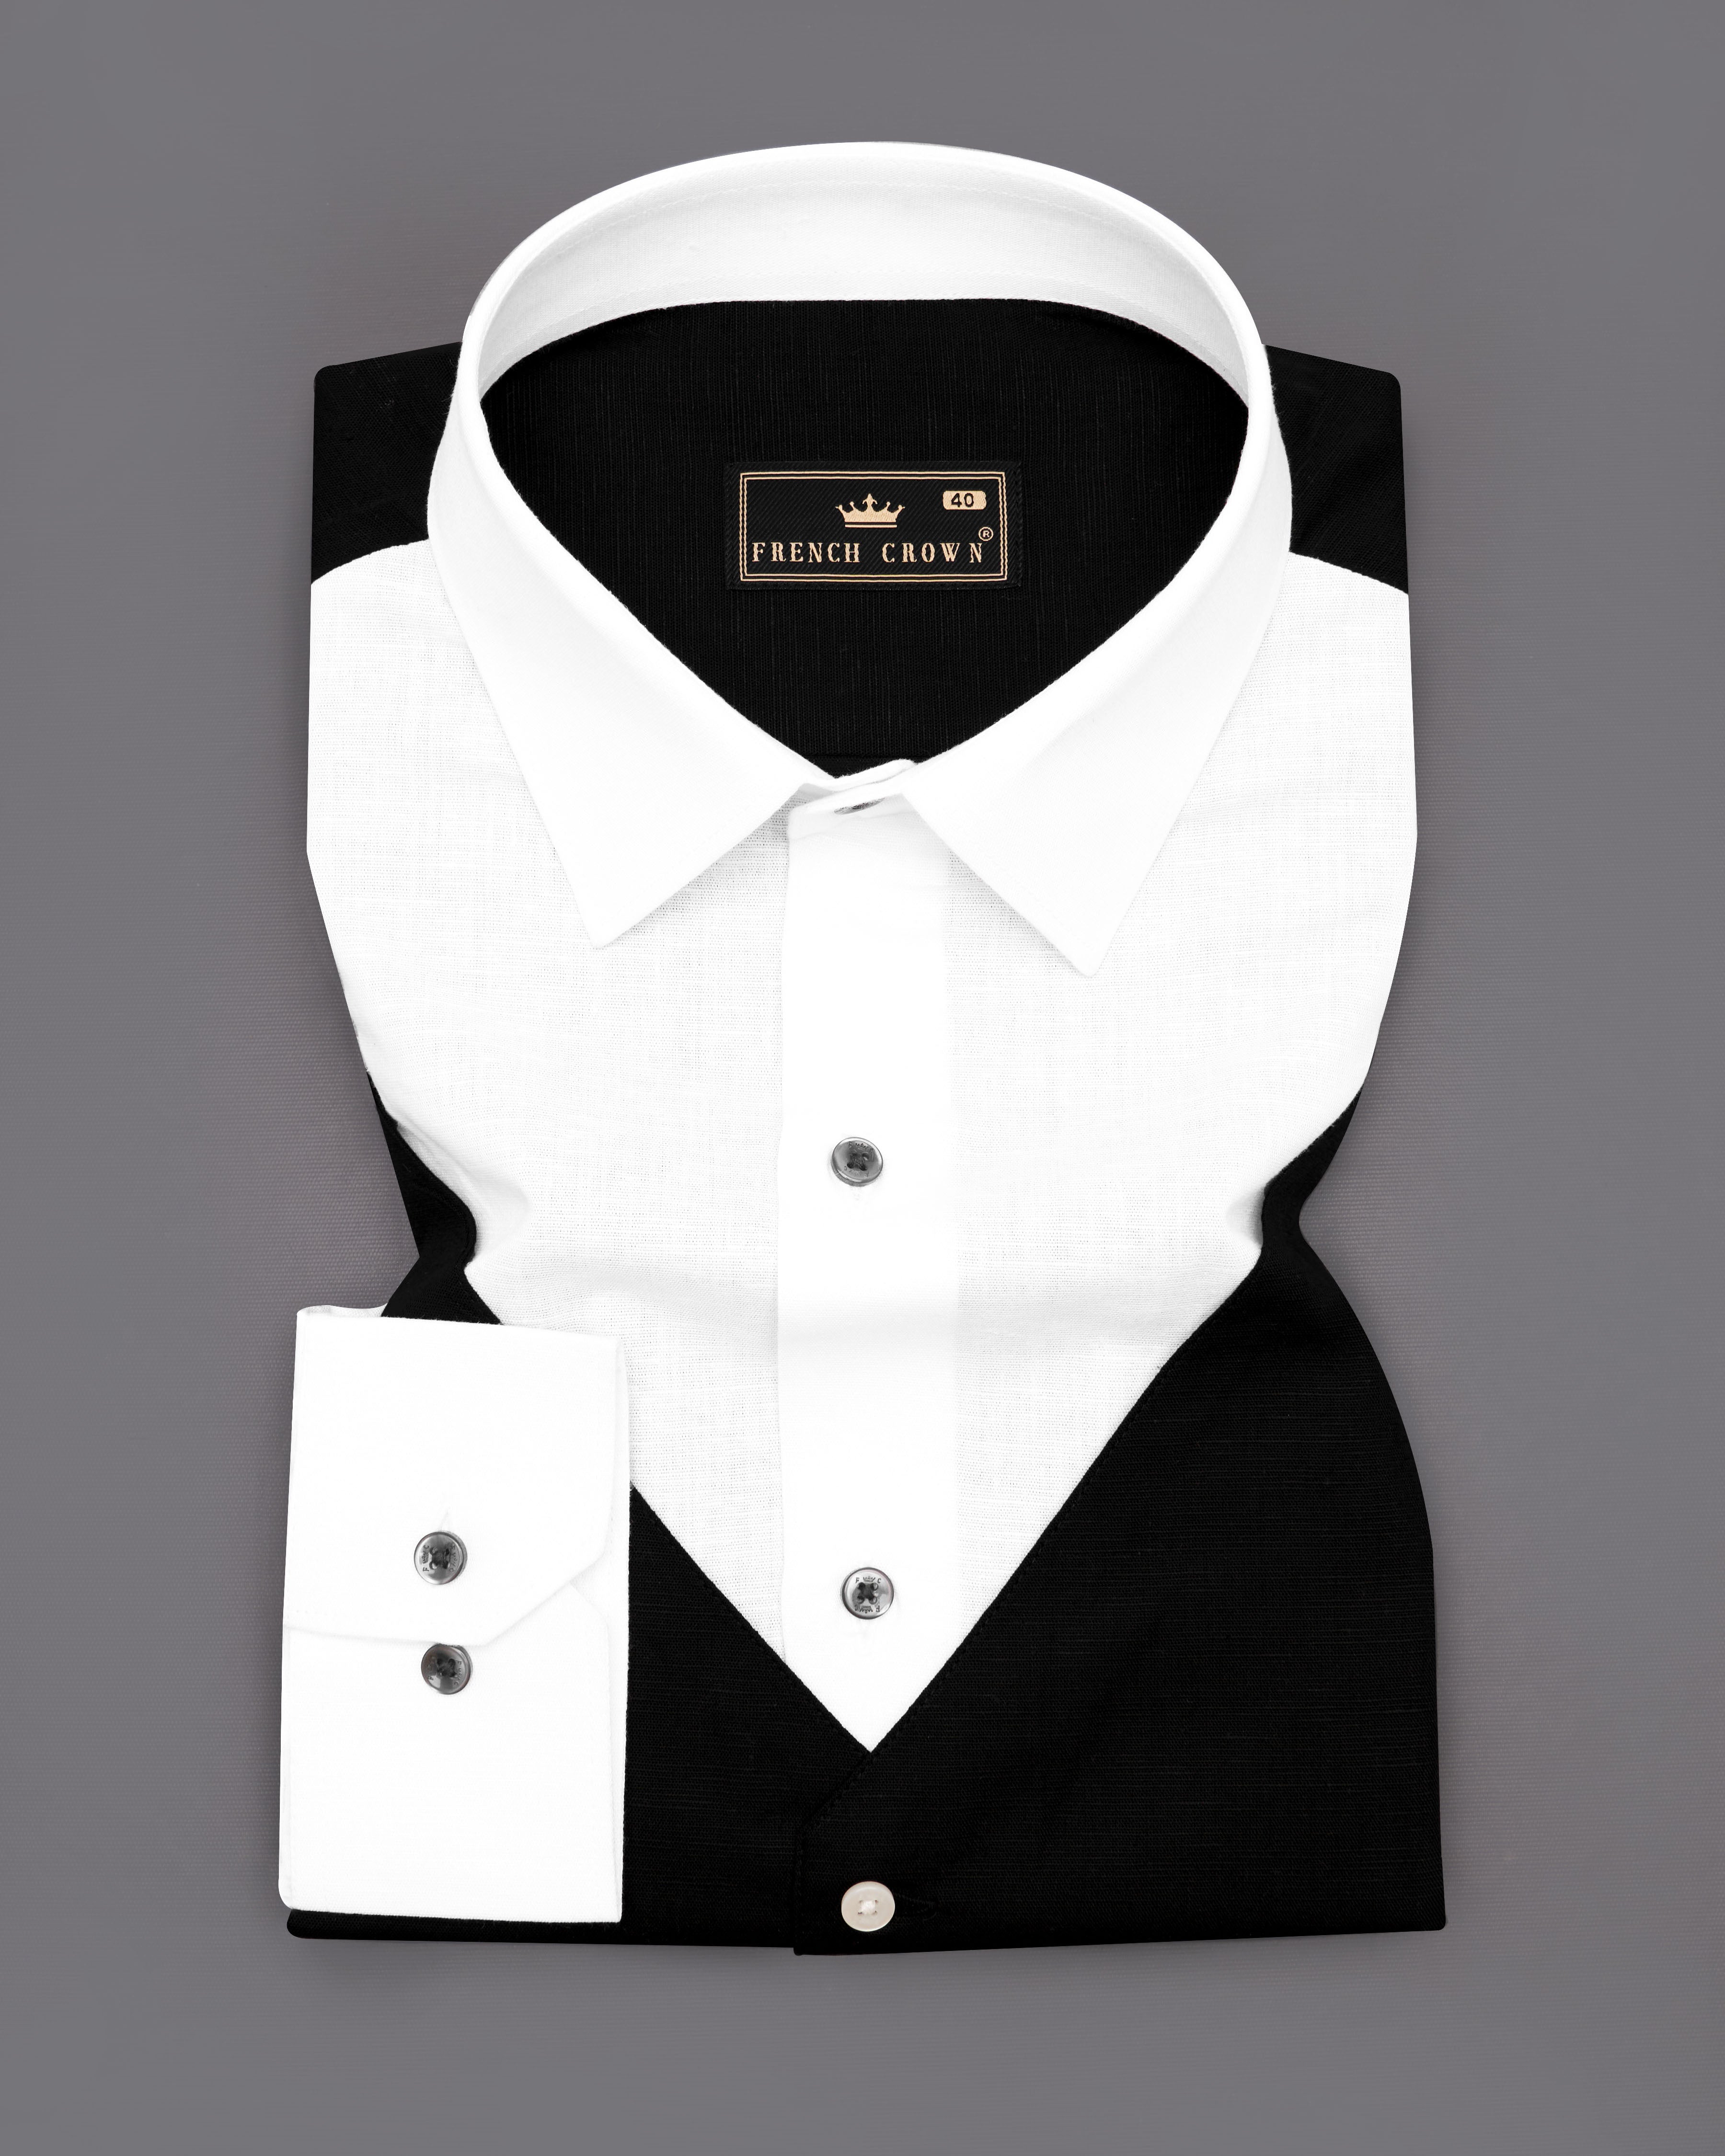 Bright White with black waistcoat Patterned Luxurious Linen Shirt 4034-BLK-P25-38, 4034-BLK-P25-H-38, 4034-BLK-P25-39, 4034-BLK-P25-H-39, 4034-BLK-P25-40, 4034-BLK-P25-H-40, 4034-BLK-P25-42, 4034-BLK-P25-H-42, 4034-BLK-P25-44, 4034-BLK-P25-H-44, 4034-BLK-P25-46, 4034-BLK-P25-H-46, 4034-BLK-P25-48, 4034-BLK-P25-H-48, 4034-BLK-P25-50, 4034-BLK-P25-H-50, 4034-BLK-P25-52, 4034-BLK-P25-H-52